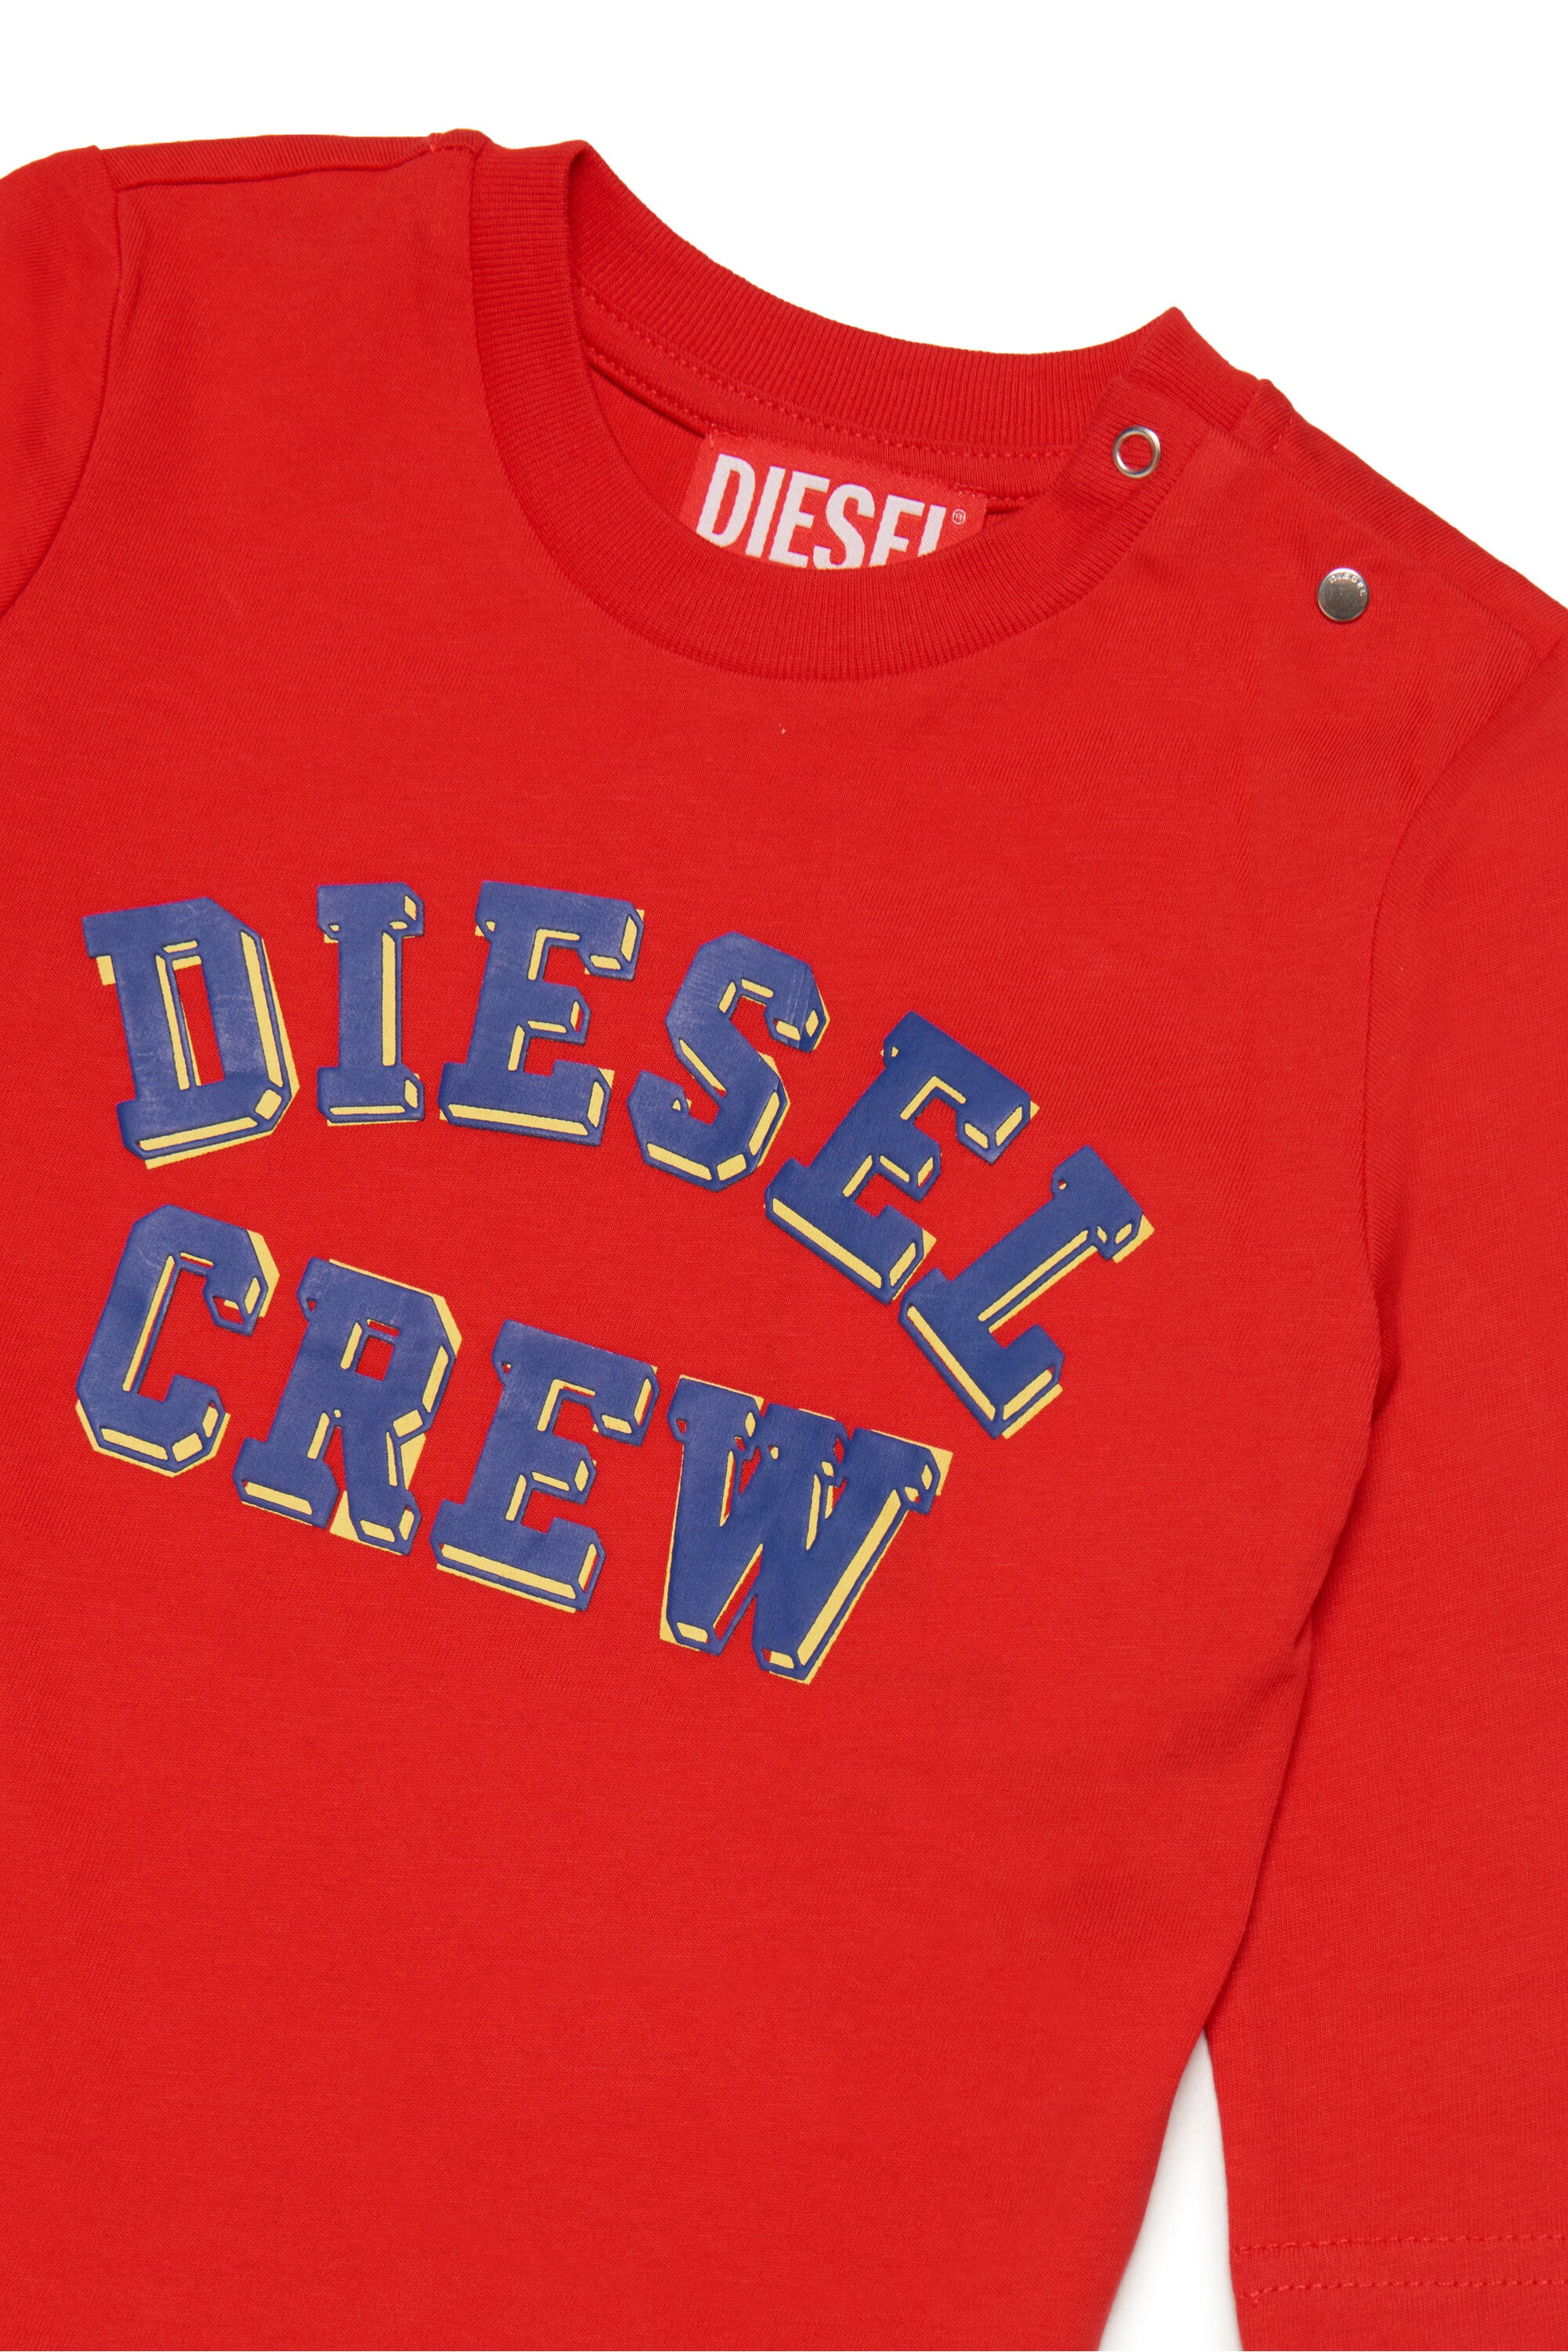 Crew-neck jersey t-shirt with Diesel Crew graphics